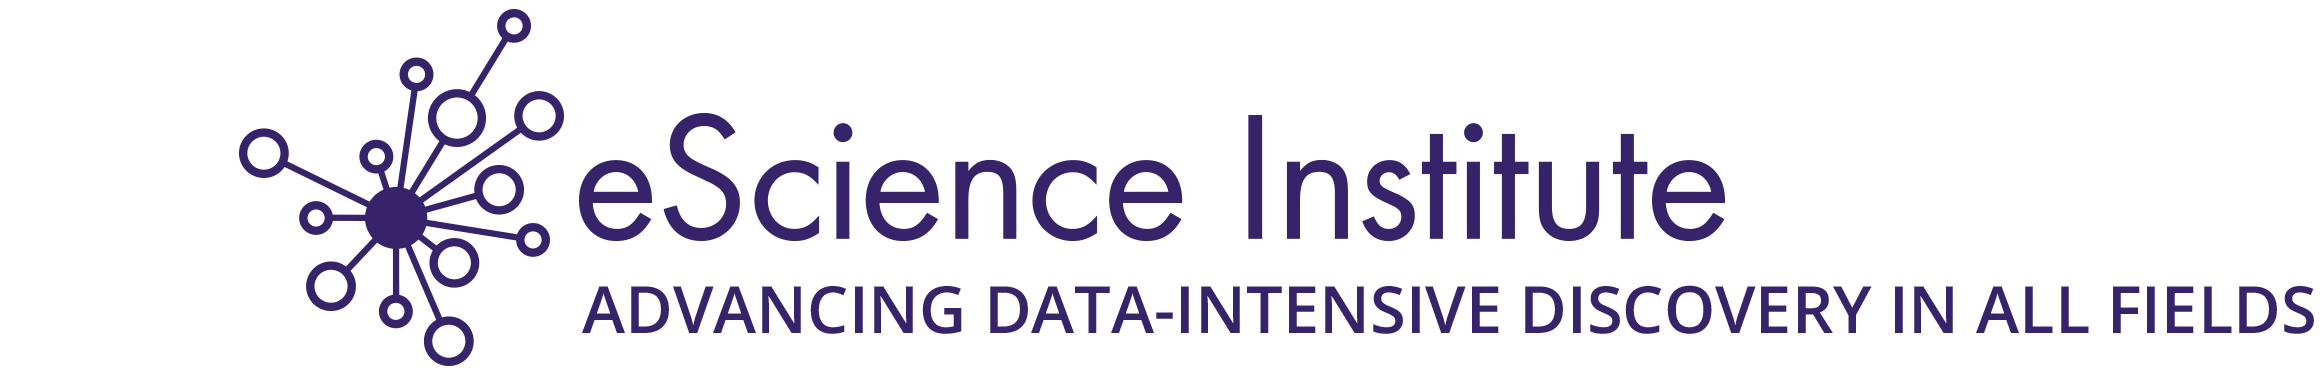 _images/eScience_Logo_HR.png